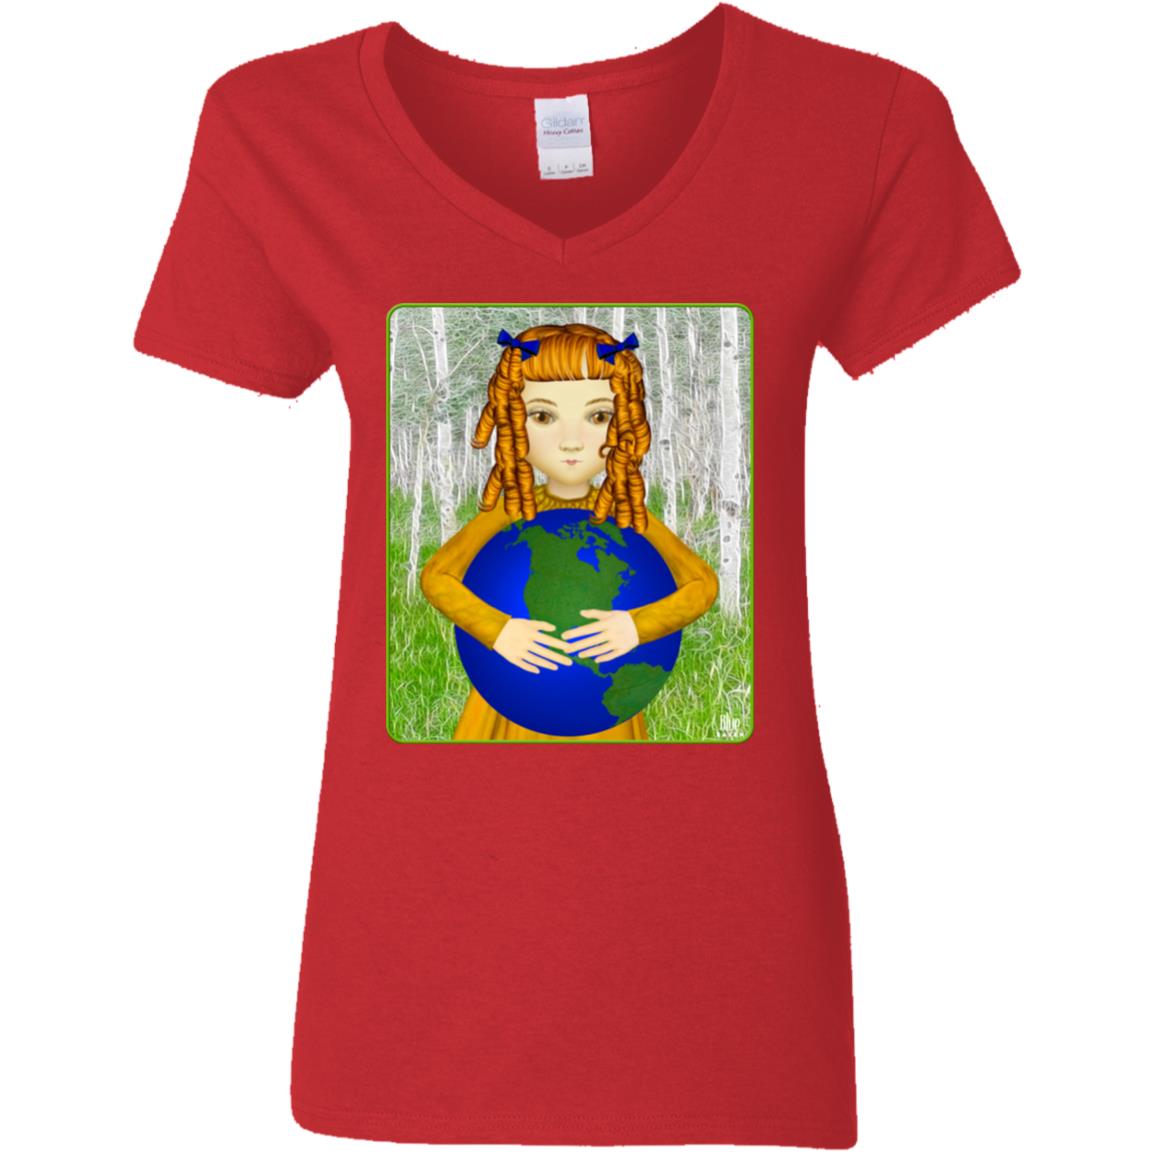 Save My World - Women's V-Neck T Shirt